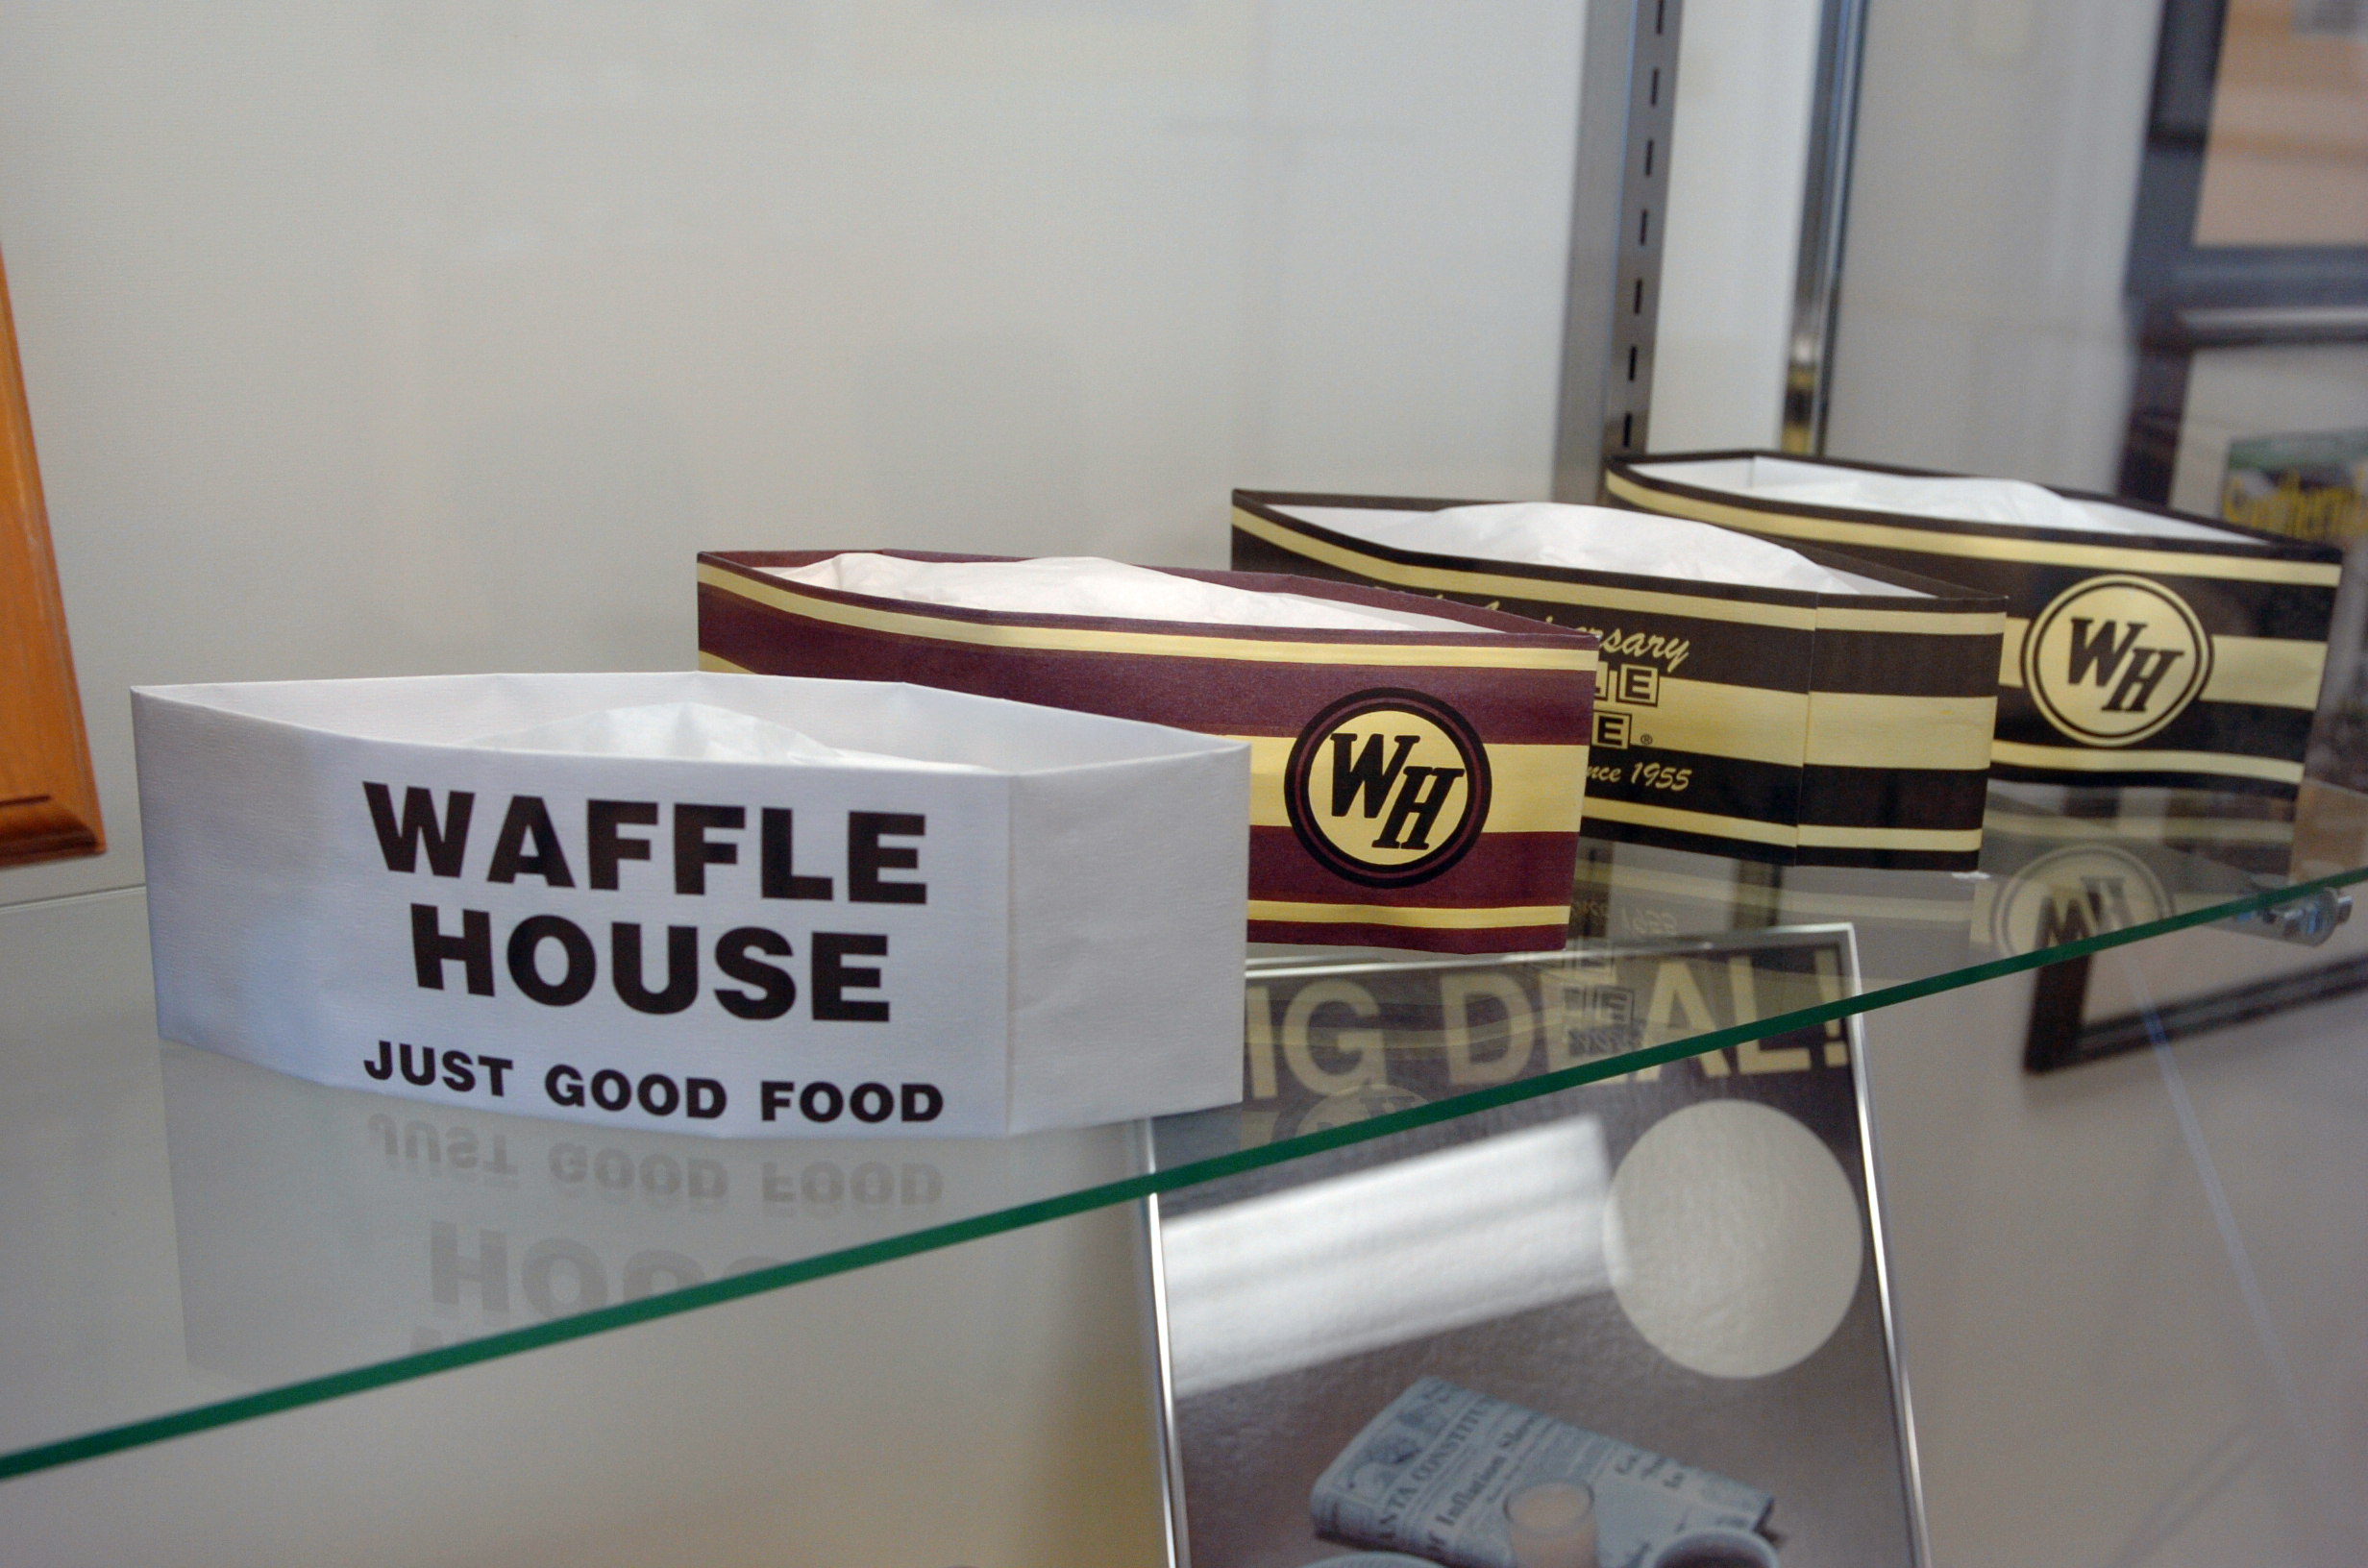 The First Waffle House Georgia souvenir marble coaster